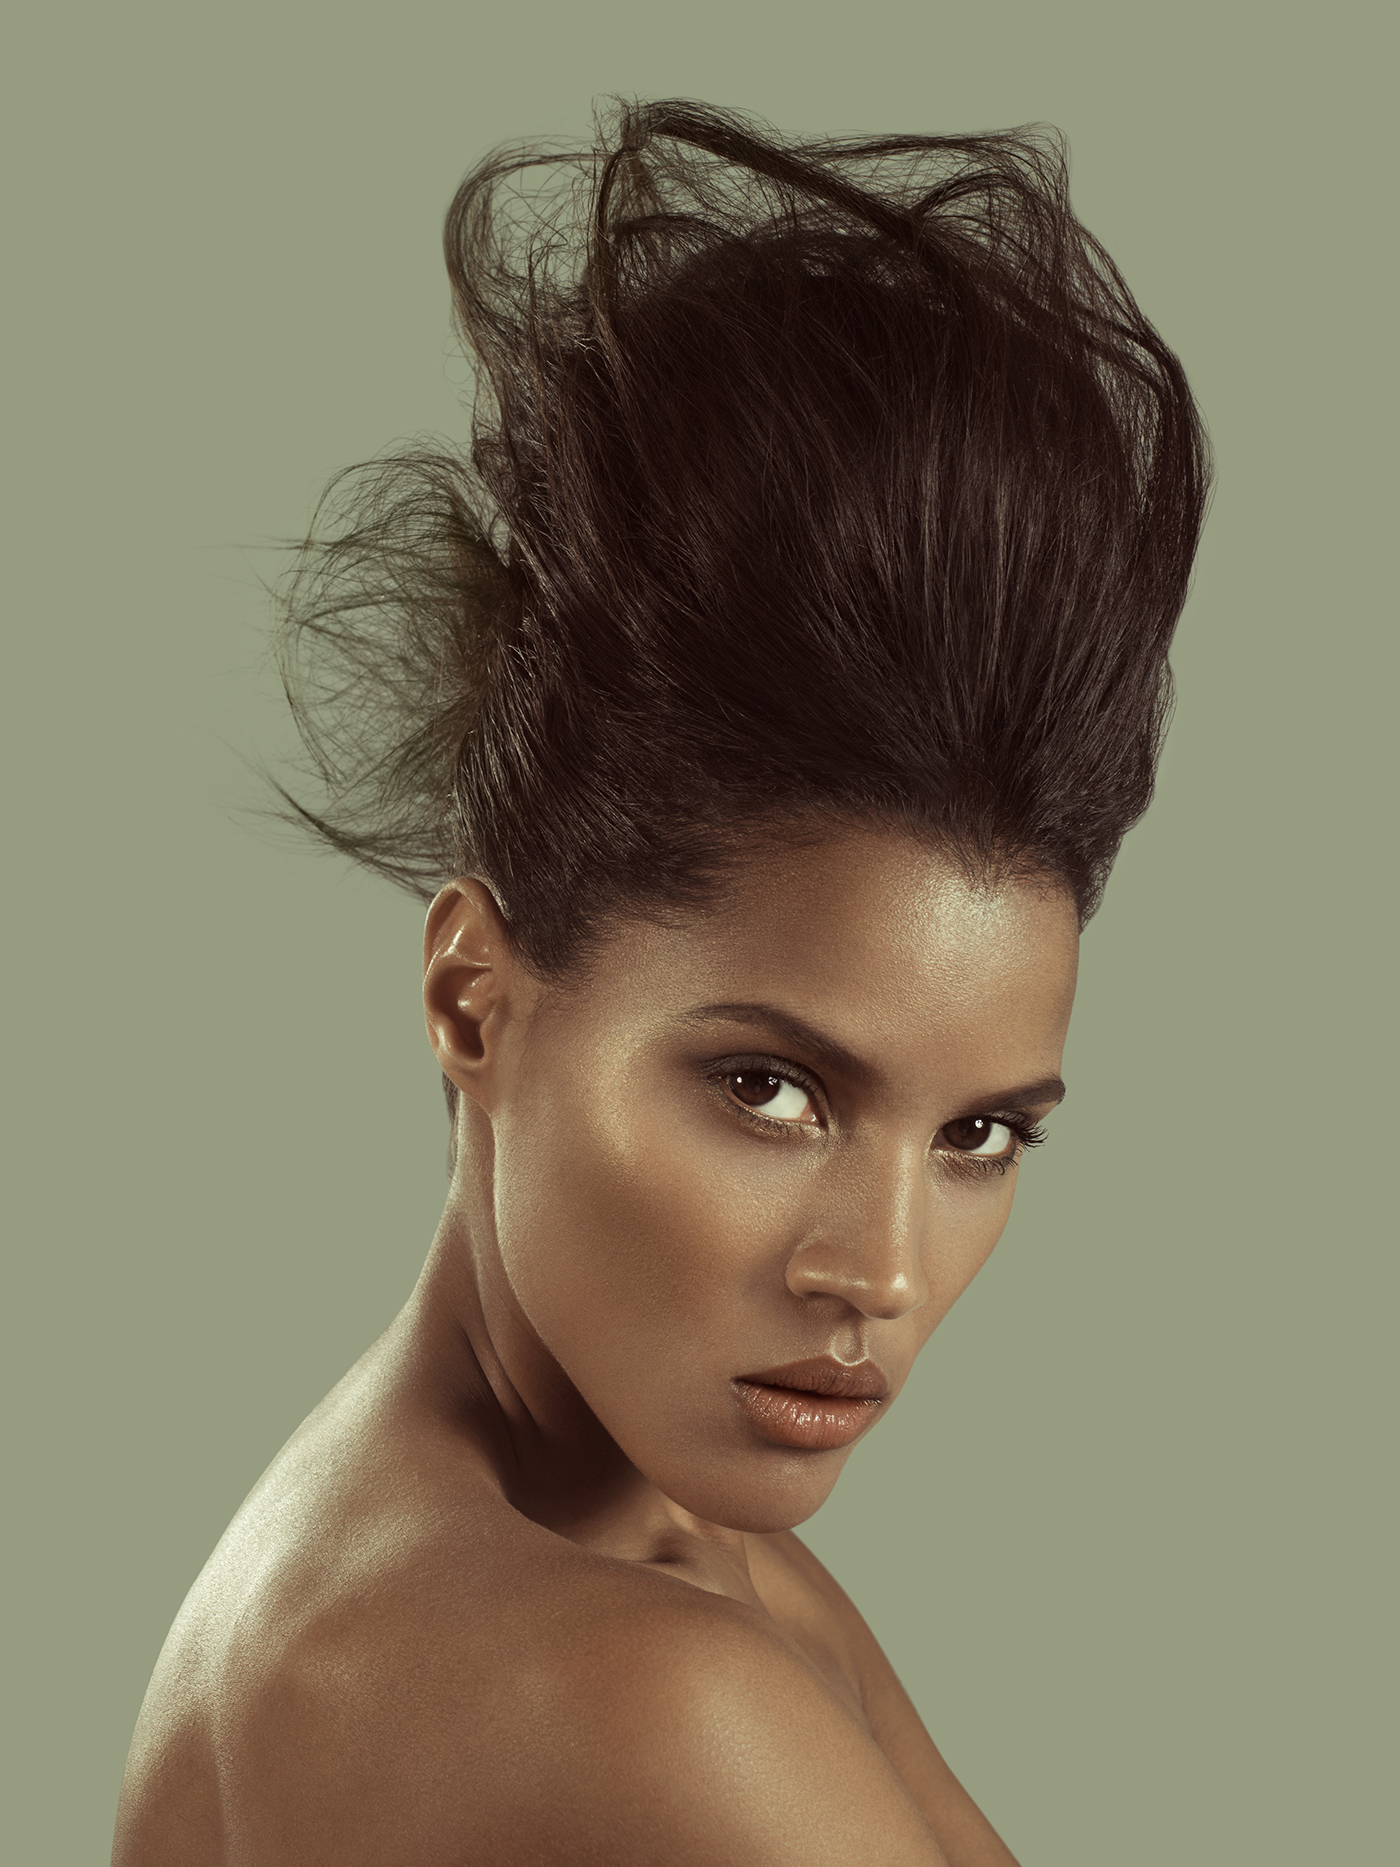 retouching  dark skin hair style smooth skin close up portrait photography